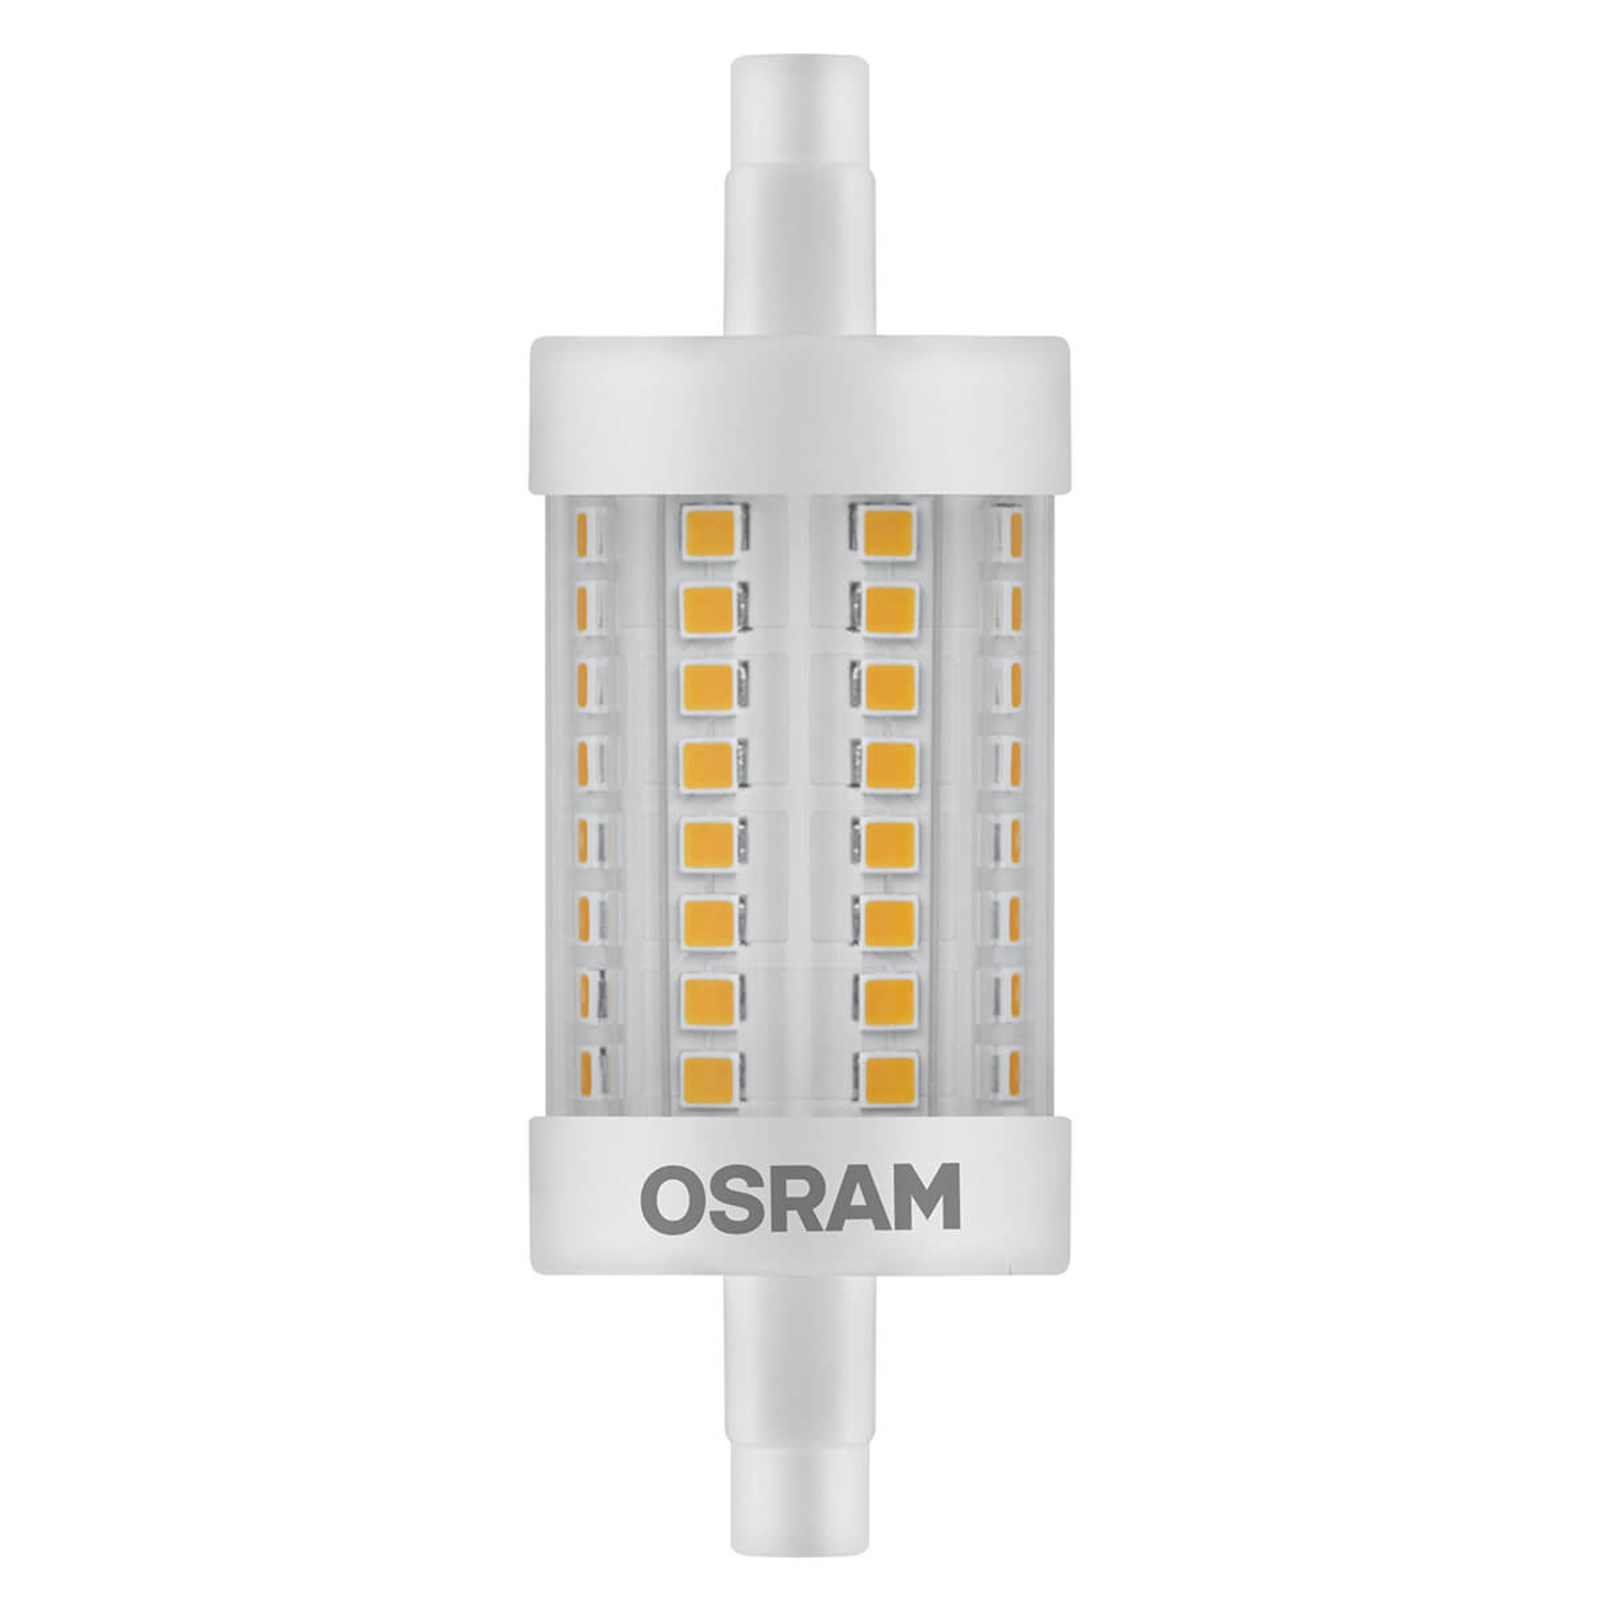 OSRAM LED-stav R7s 8,2 W varmhvit 1 055 lm